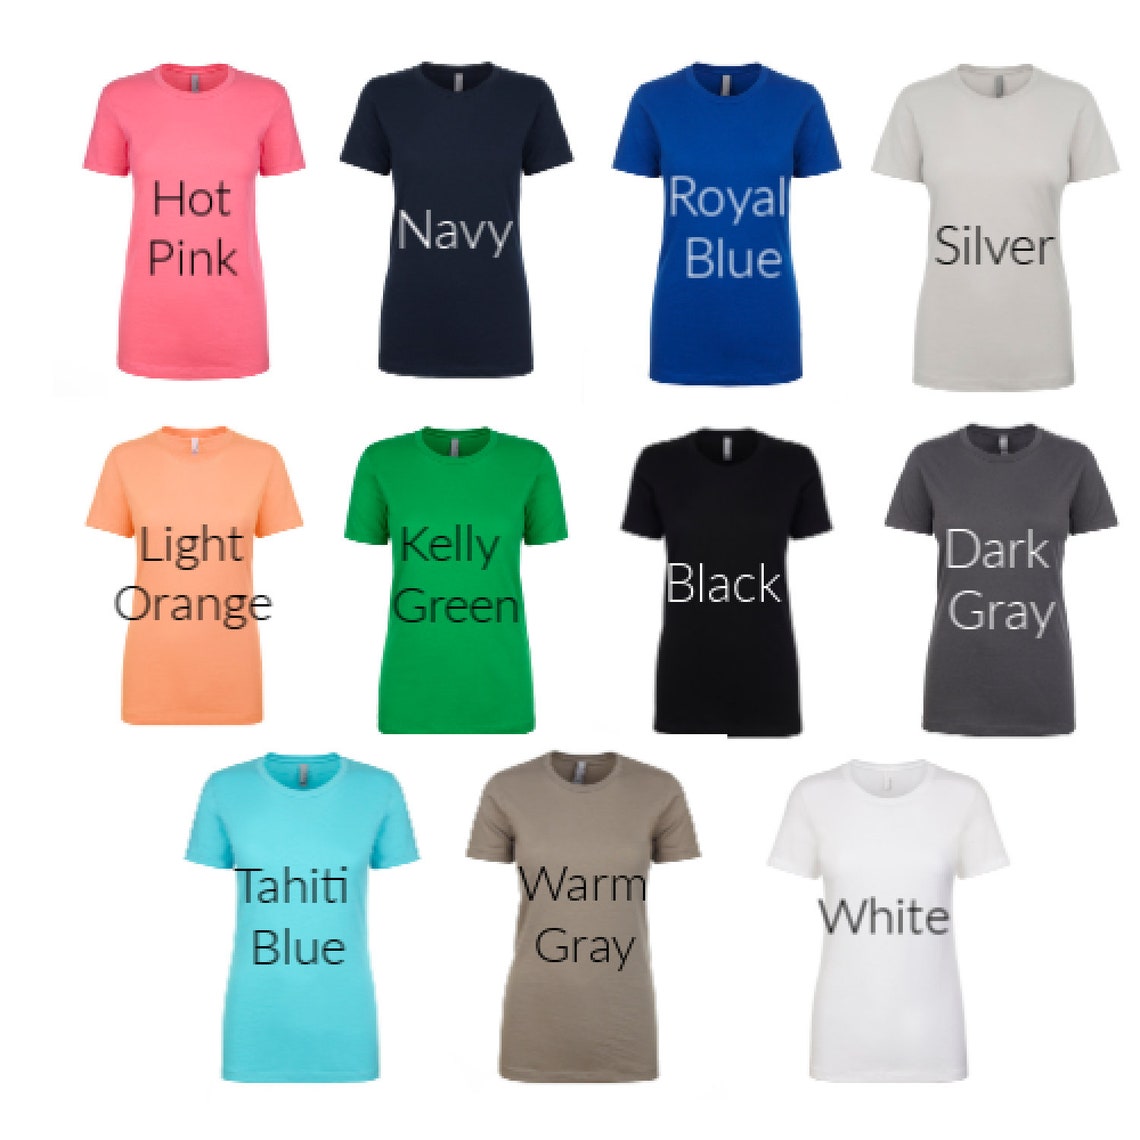 Taylor Swift Shirt Blank Space Shirt 1989 T Shirt | Etsy